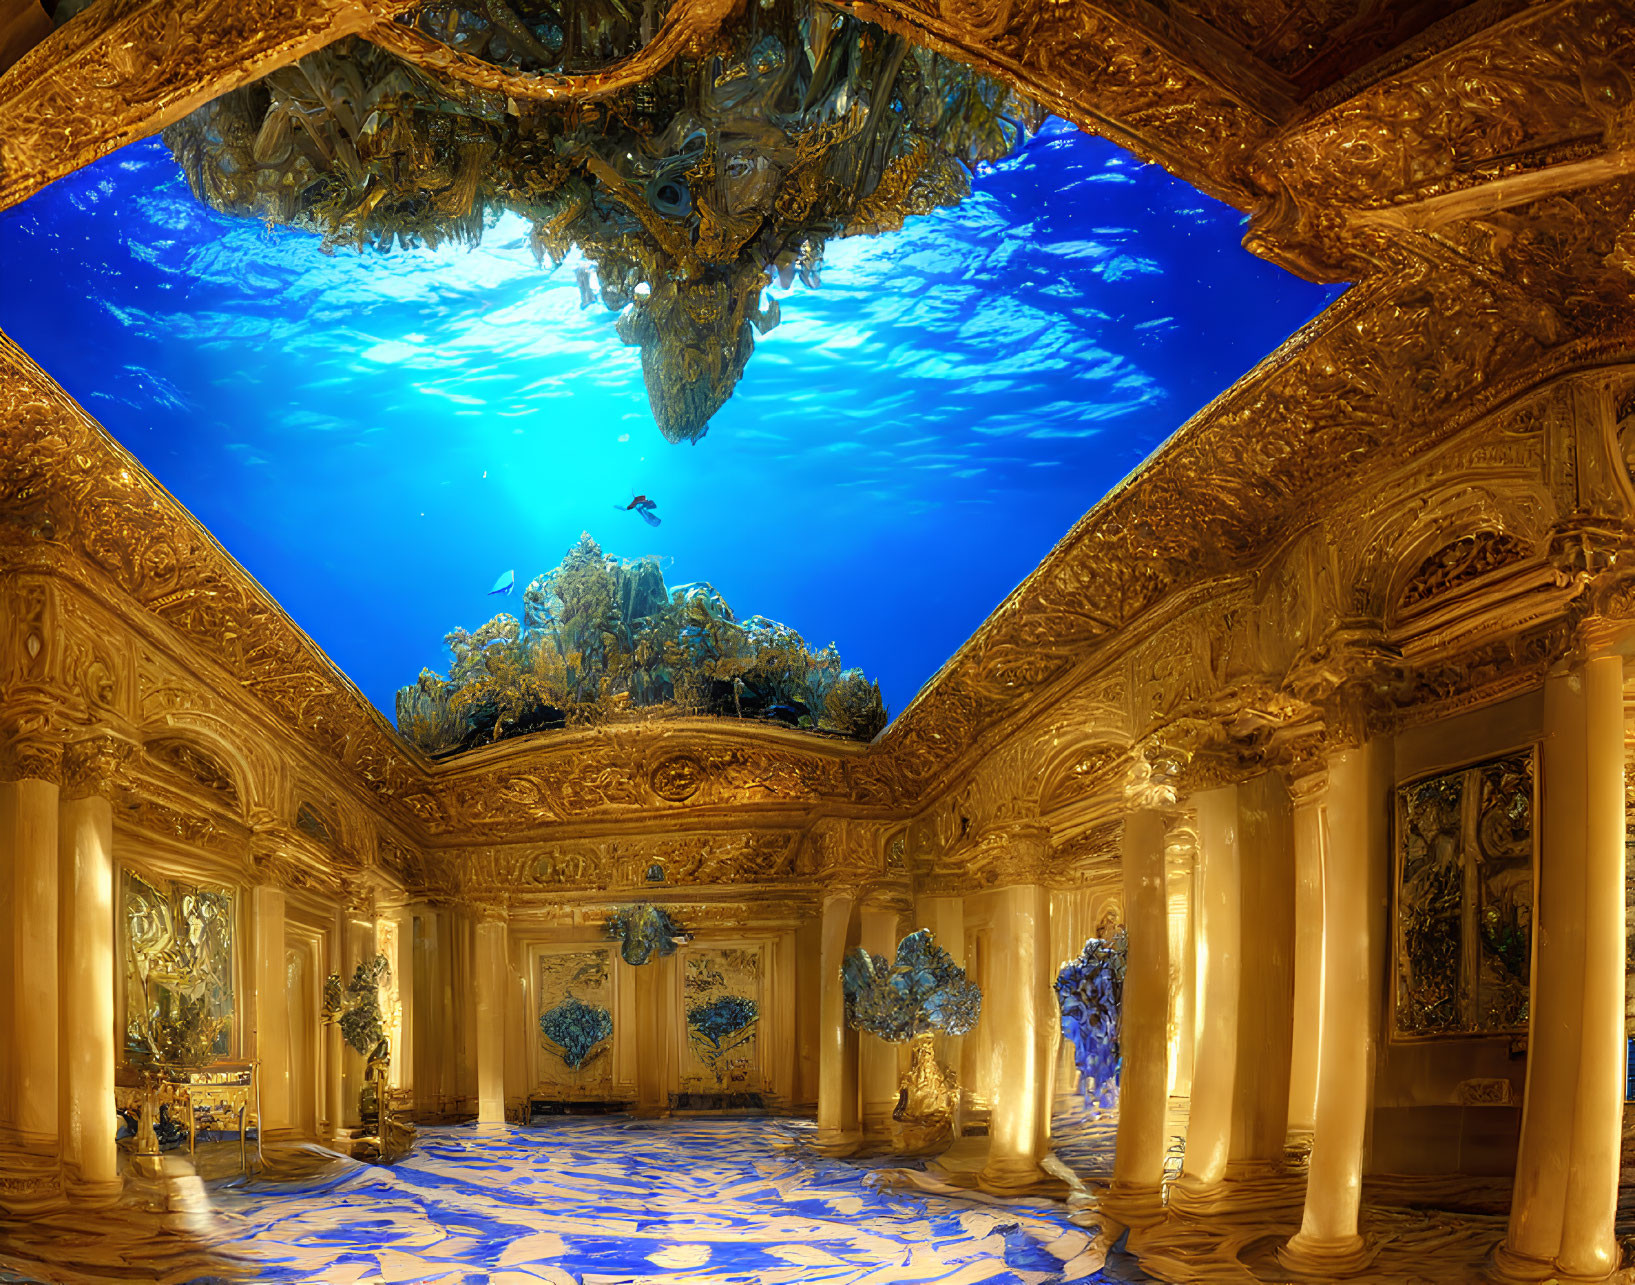 Luxurious Golden Room with Baroque Decor and Blue Aquarium Ceiling.